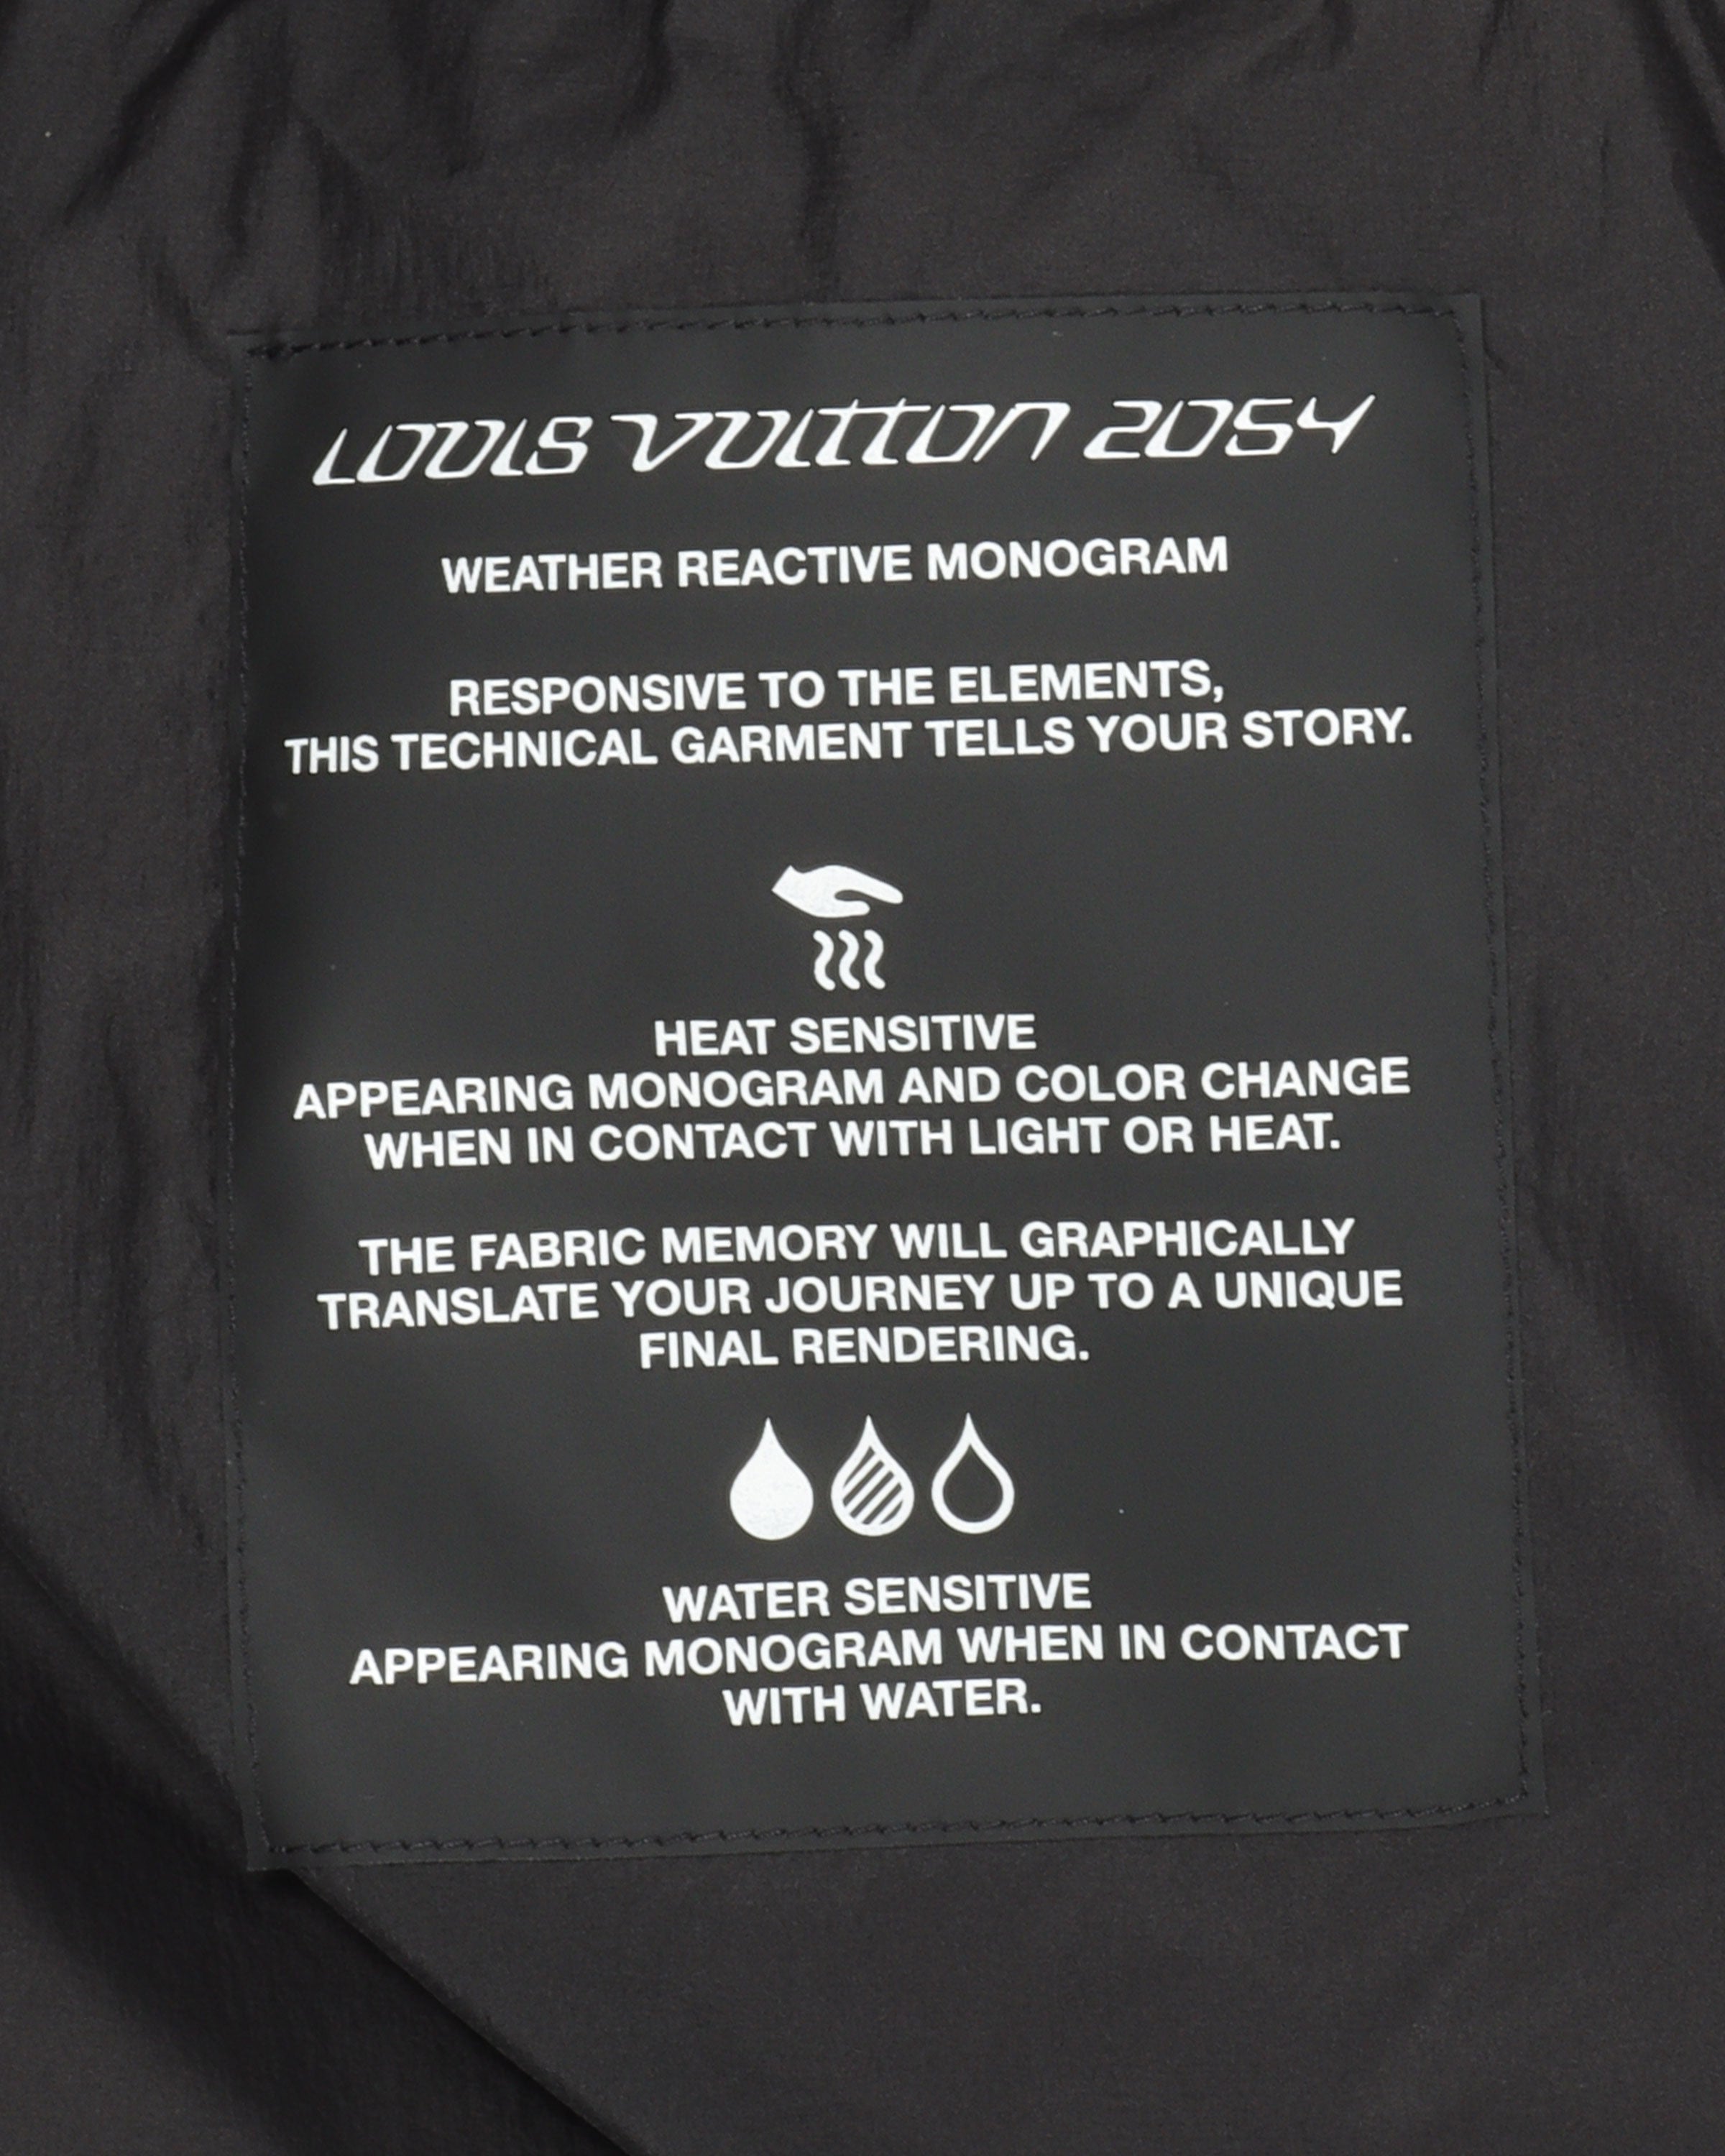 Louis Vuitton 2054 Heat Reactive Puffer Anthracite. Size 52